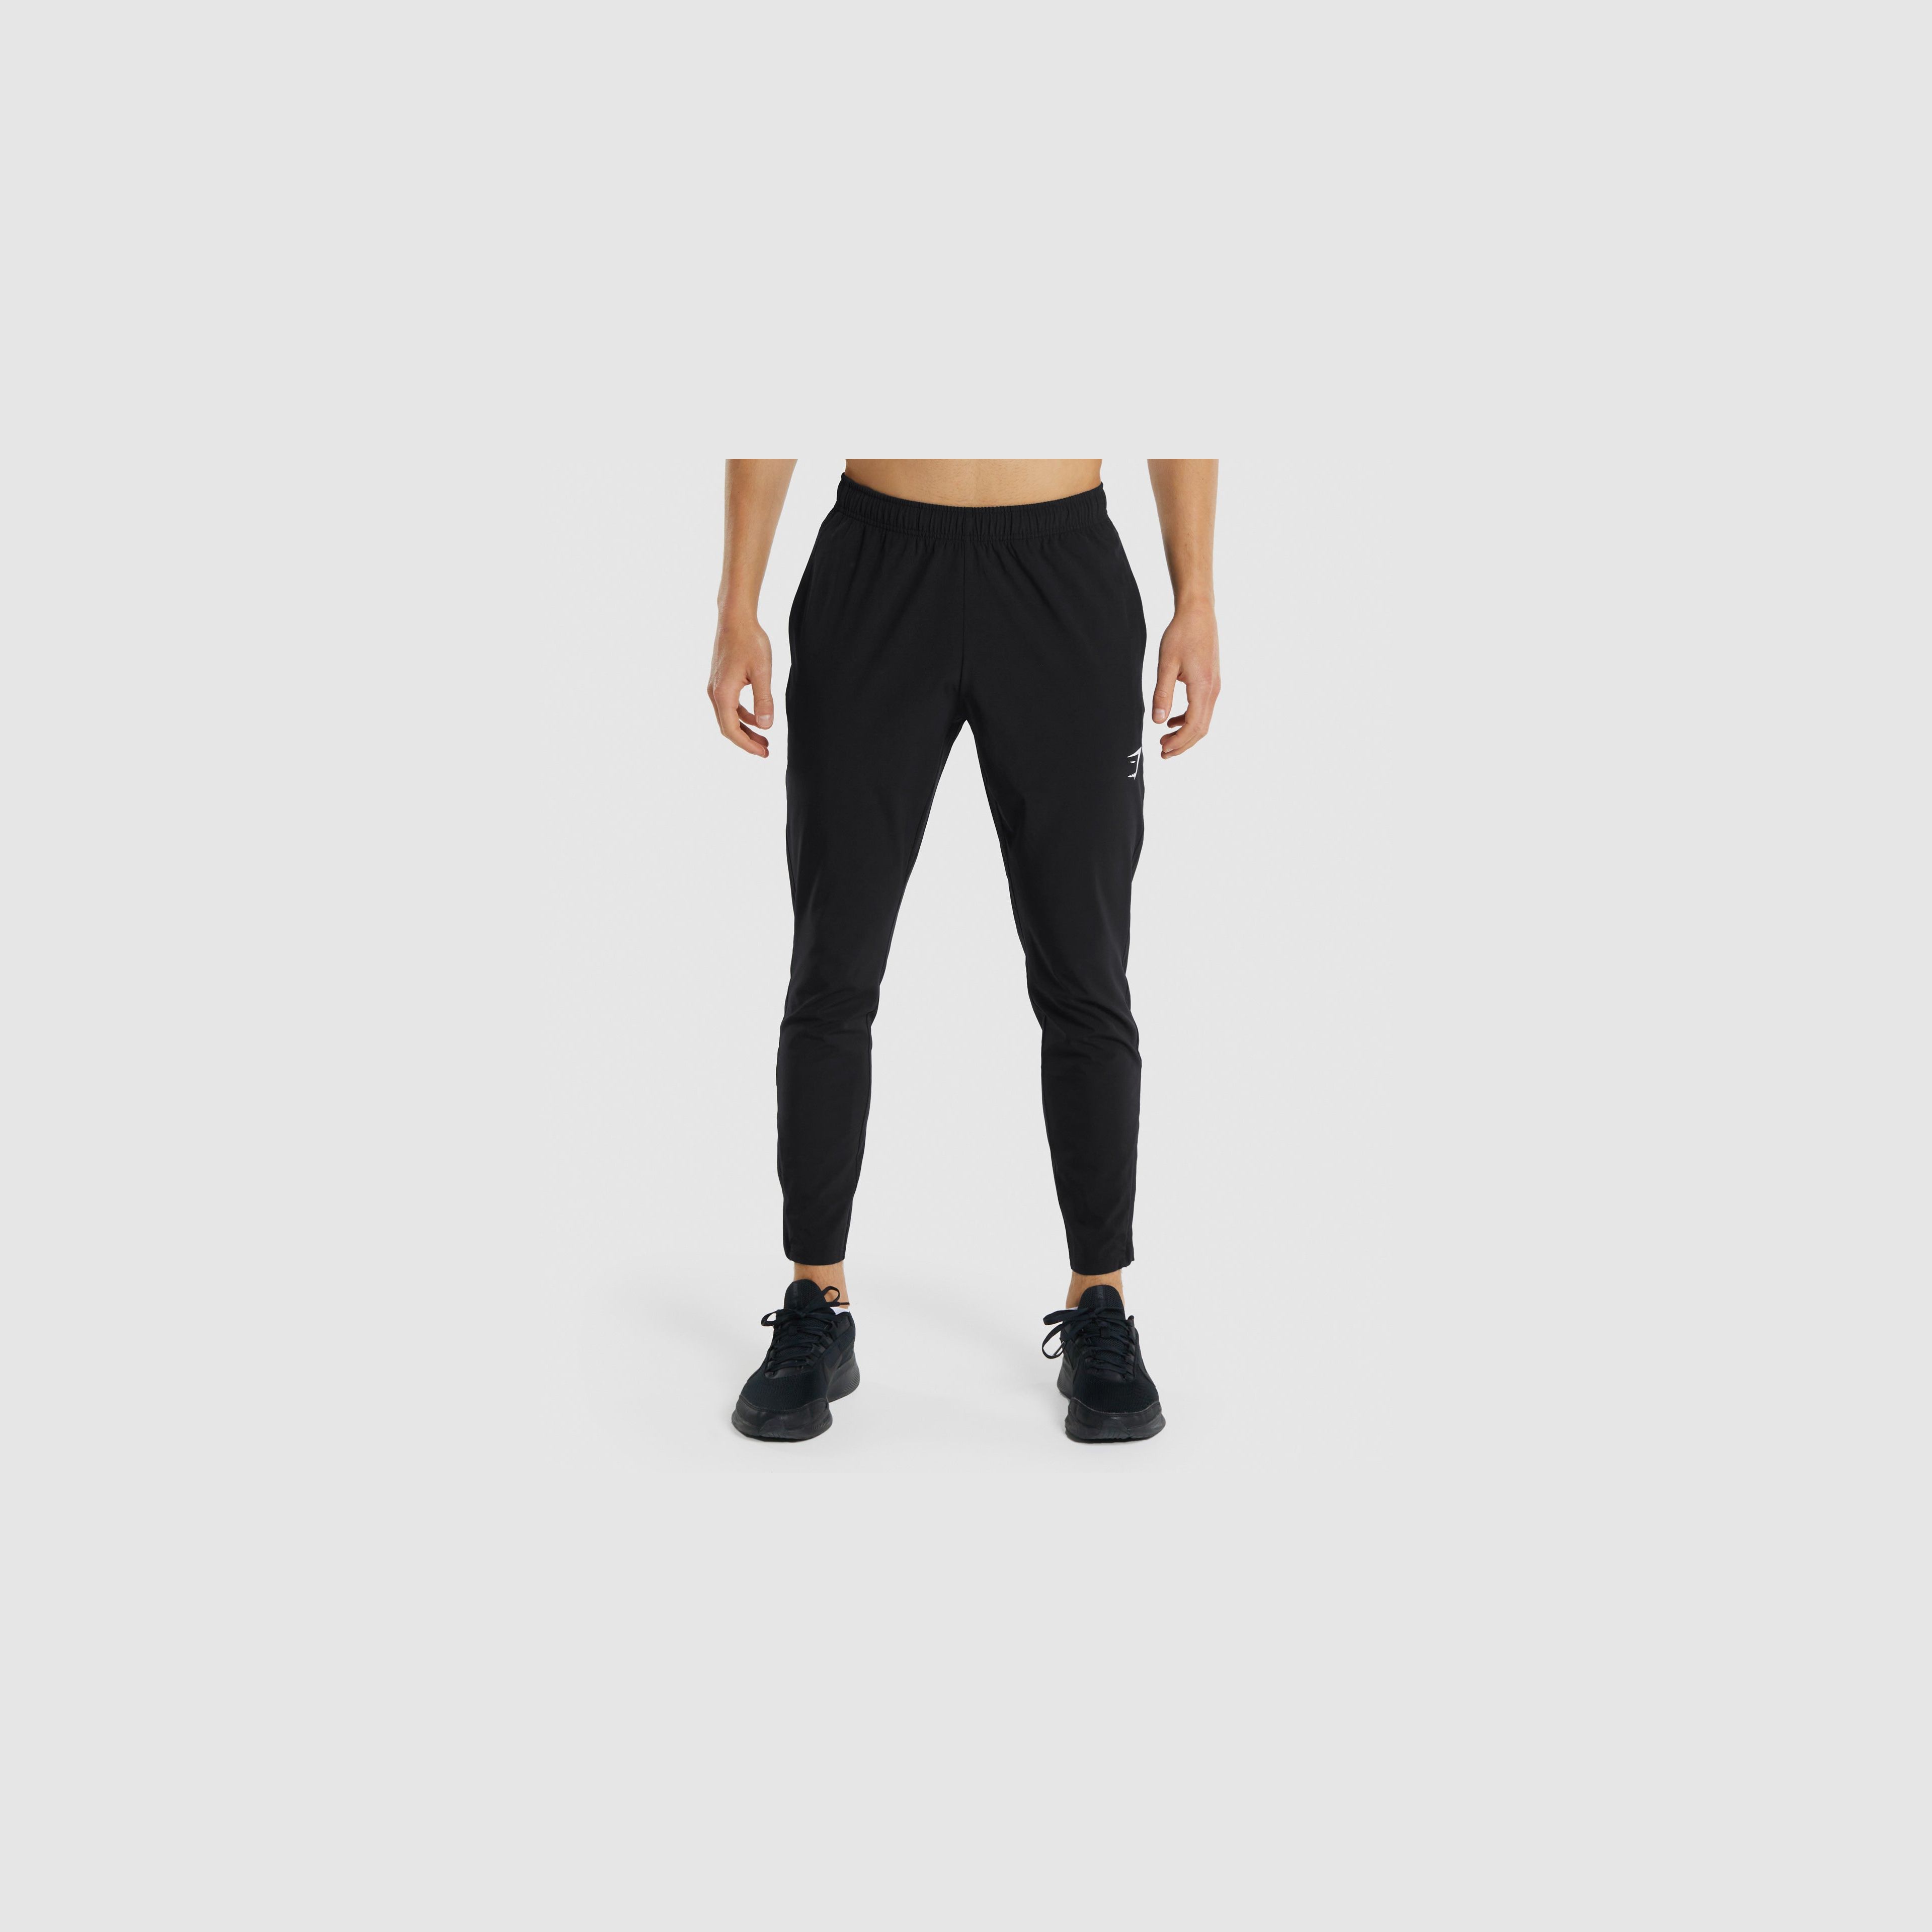 Actively Black Athleisure Wear Unisex Logo Performance Joggers on